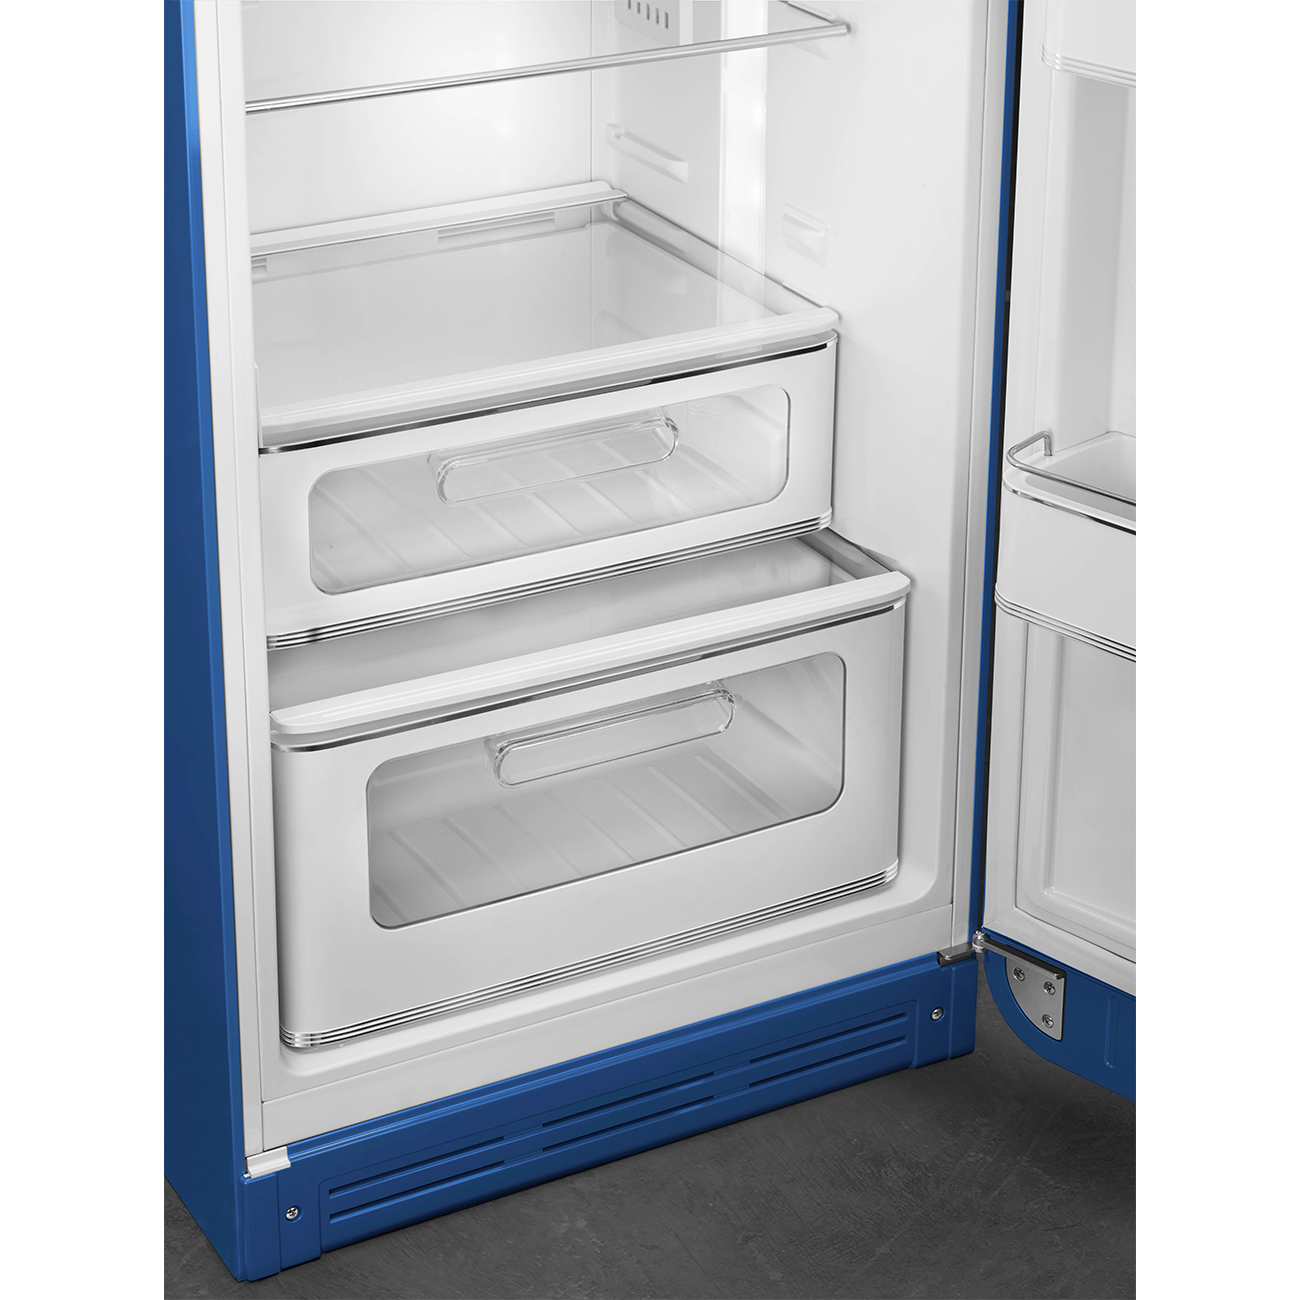 Blauw koelkast - Smeg_8